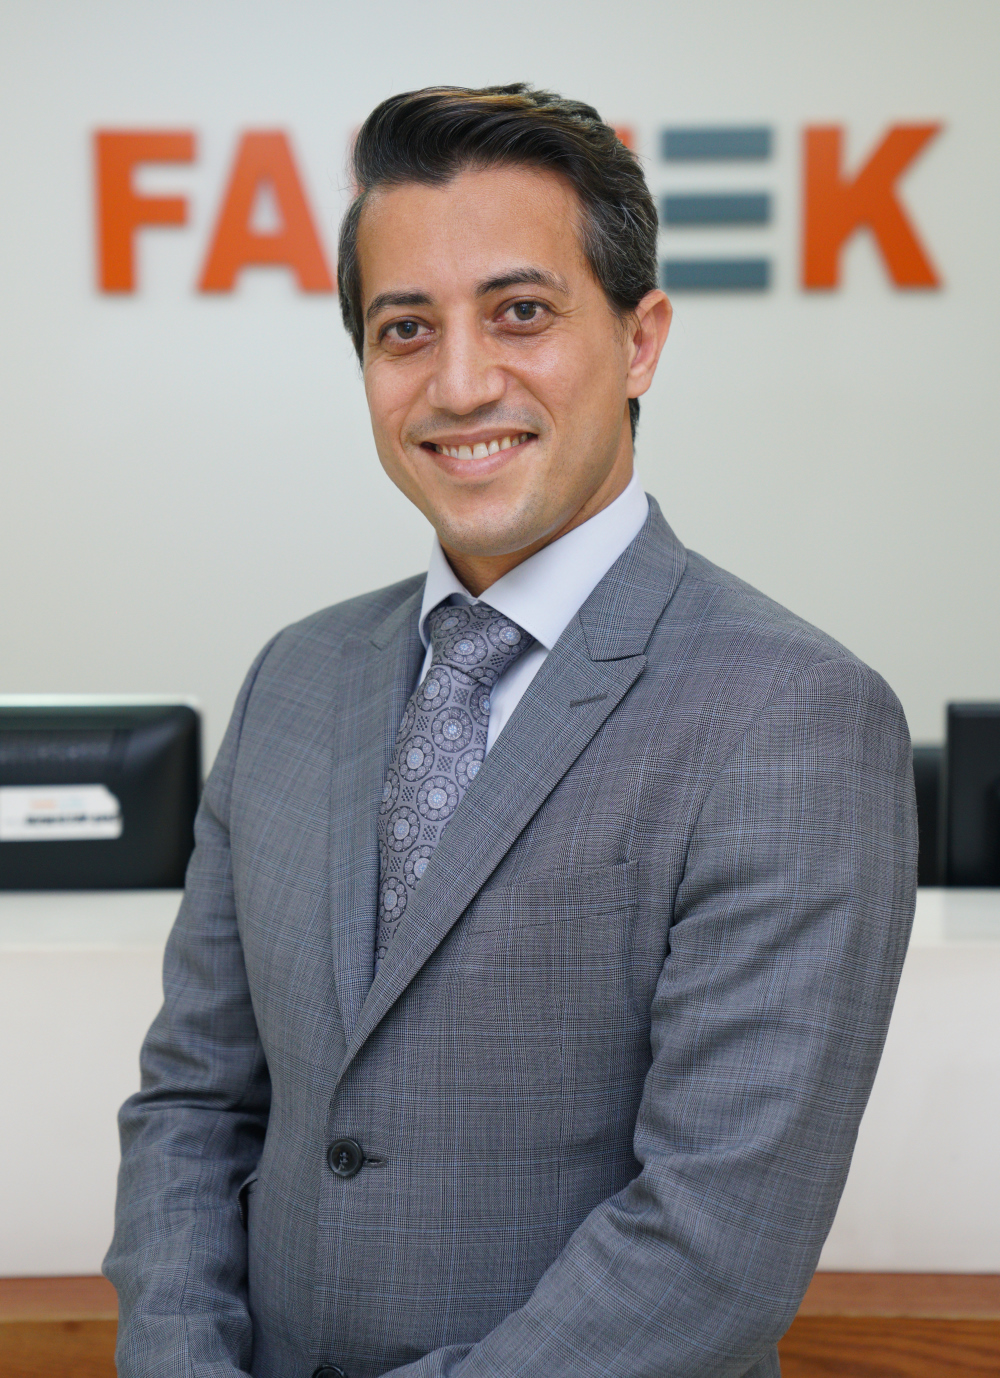 Farnek wins hospitality contracts in Dubai worth AED 7.56 million